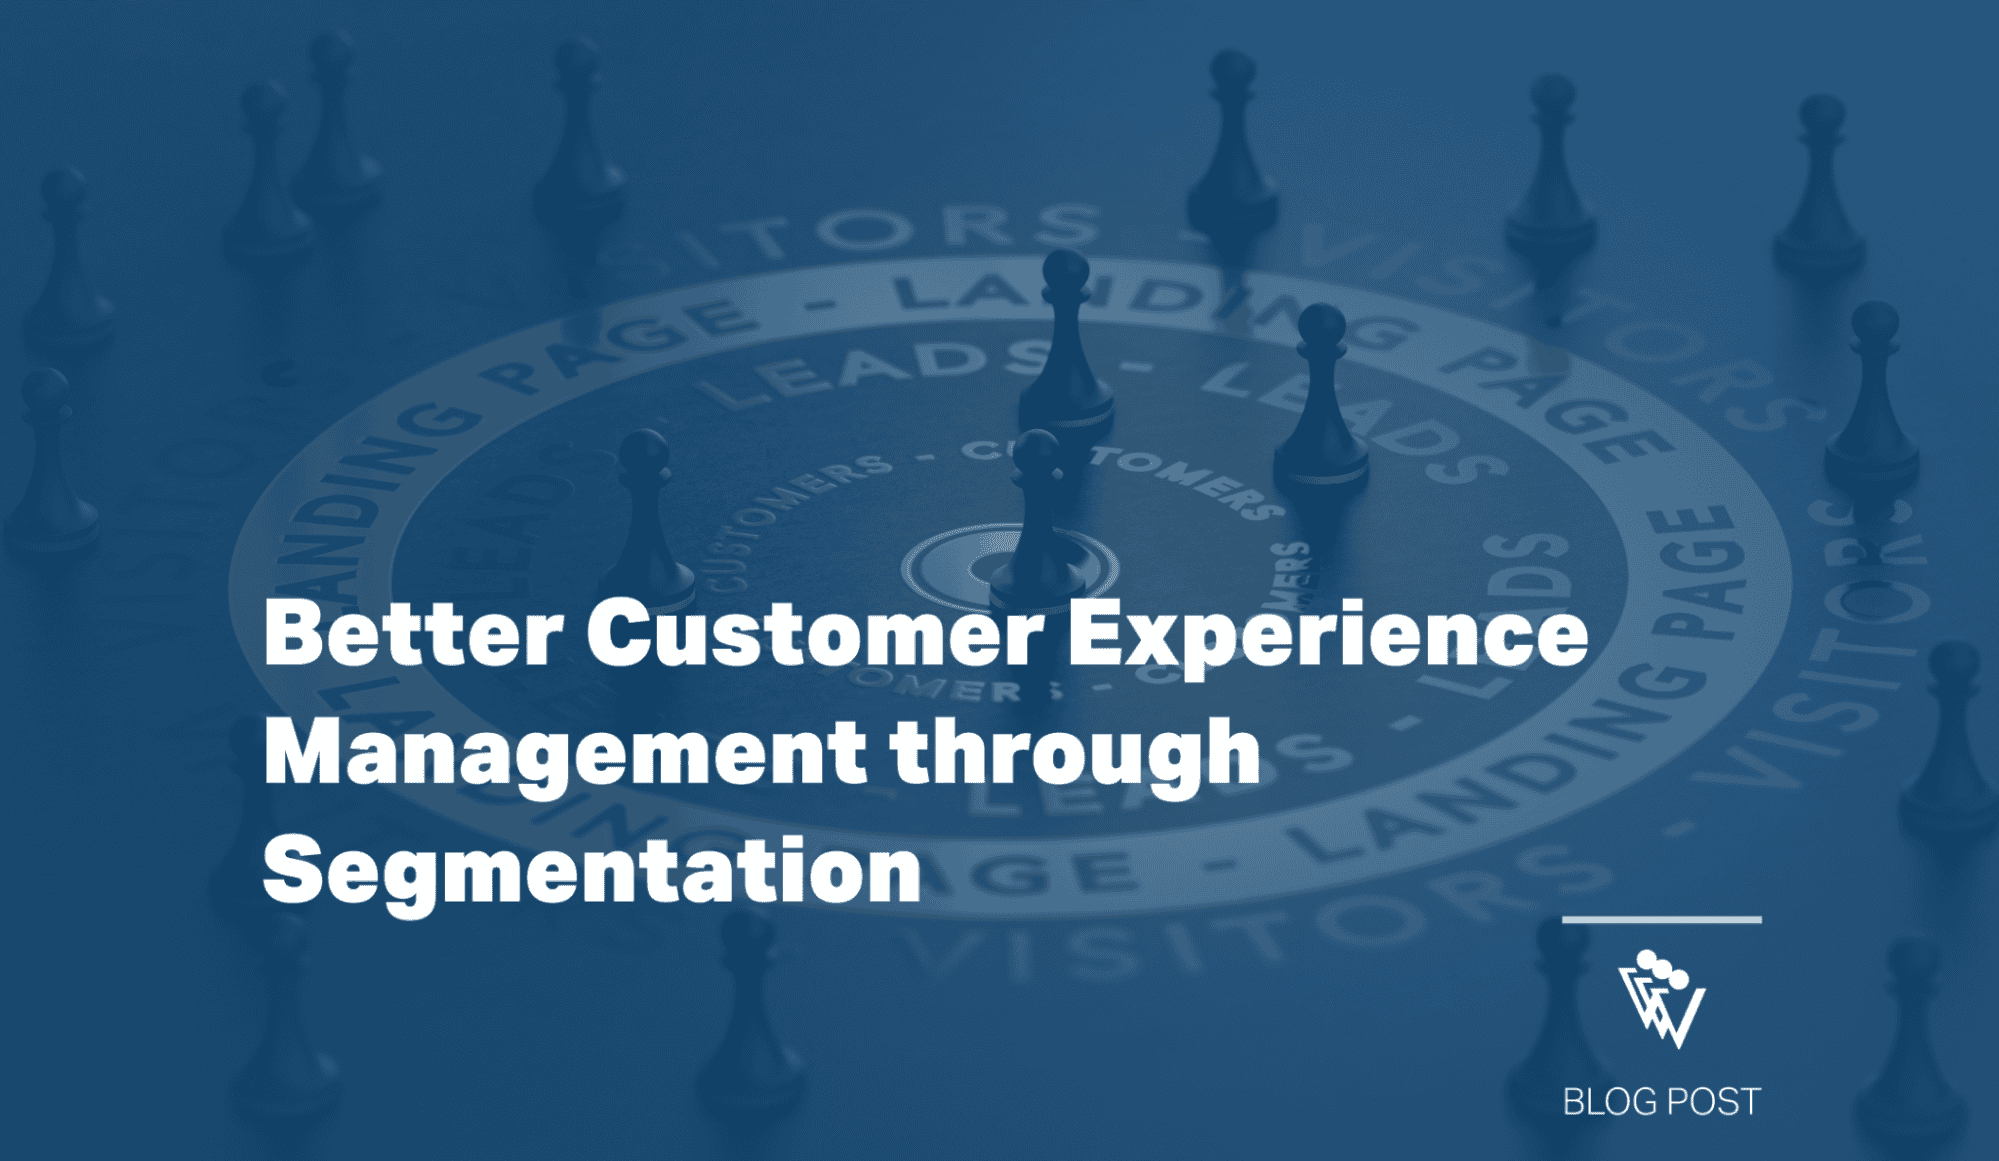 Better customer experience management through segmentation.